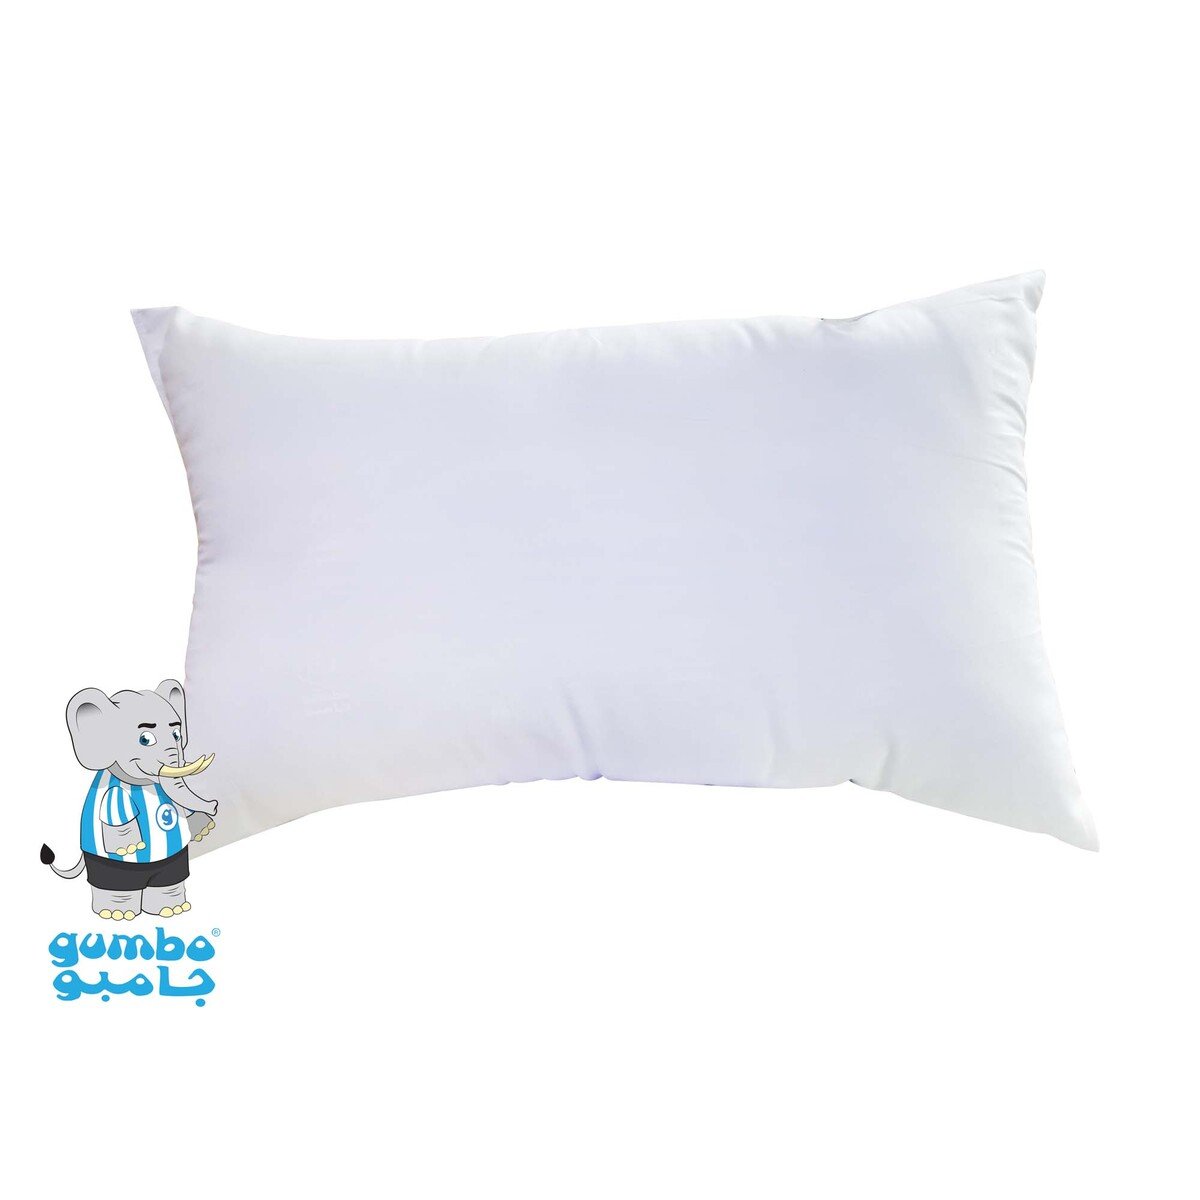 Gumbo Pillow 80X50cm 1Kg Assorted